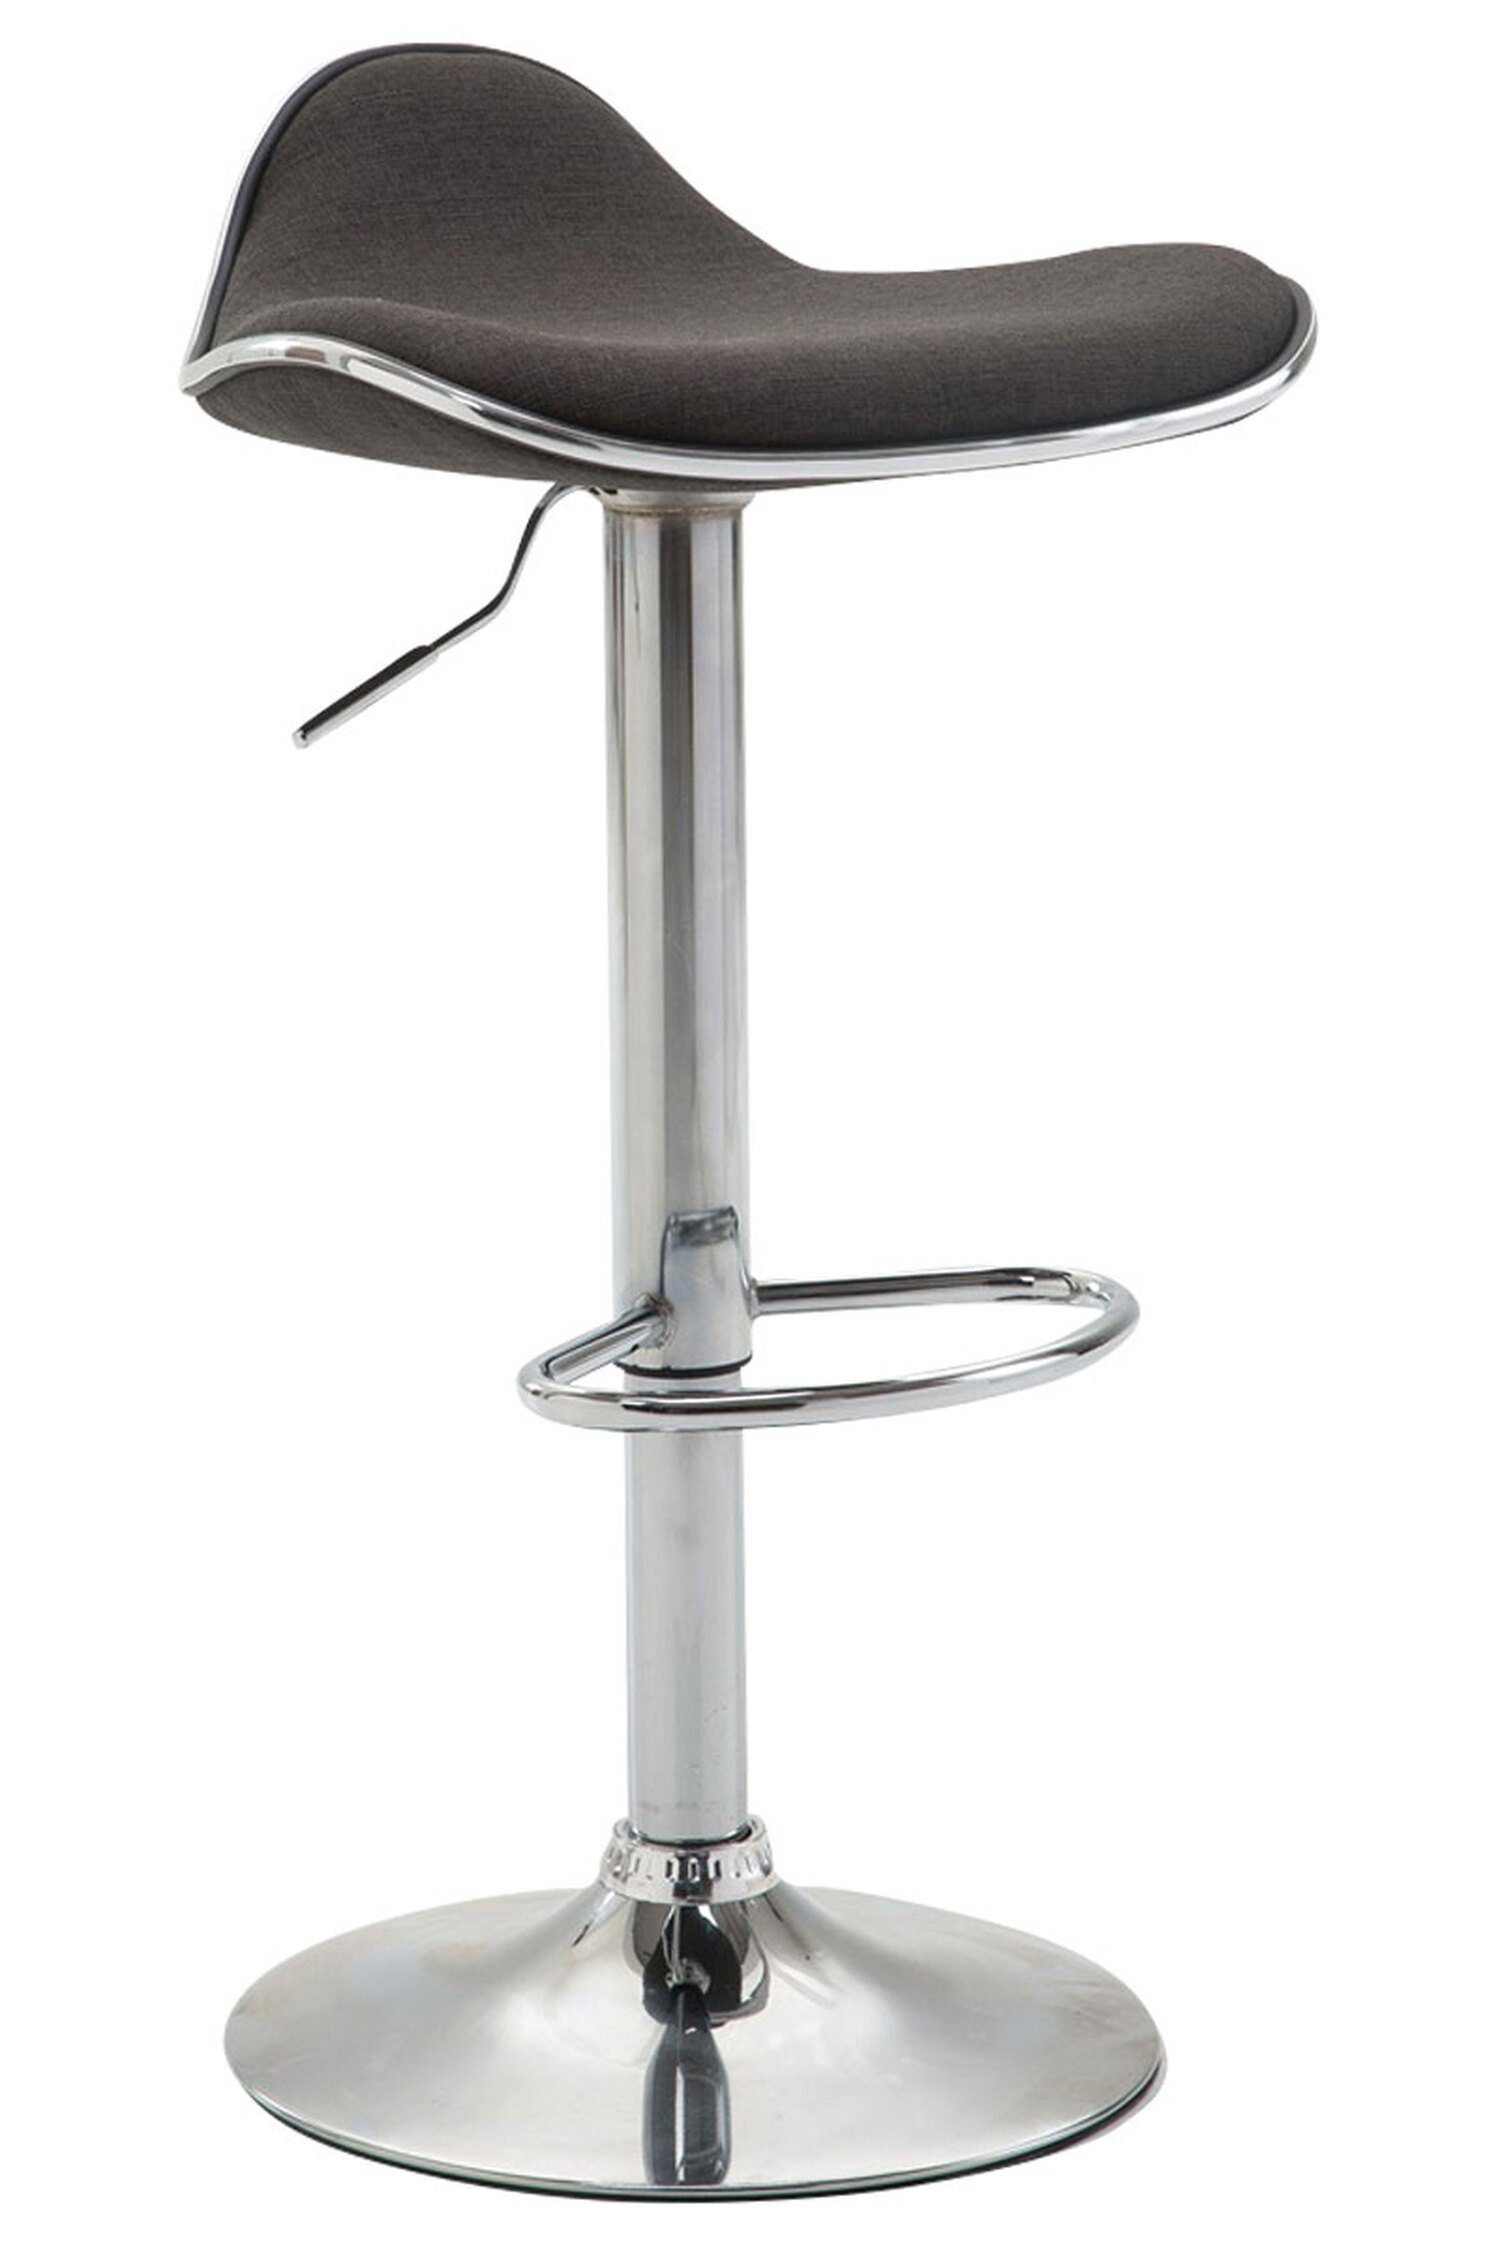 - (Barstuhl für - - Hocker Sitzfläche: - & drehbar Stahl TPFLiving chromfarbener Theke Dunkelgrau Shangrila Tresenhocker), 360° Stoff höhenverstellbar Küche Barhocker